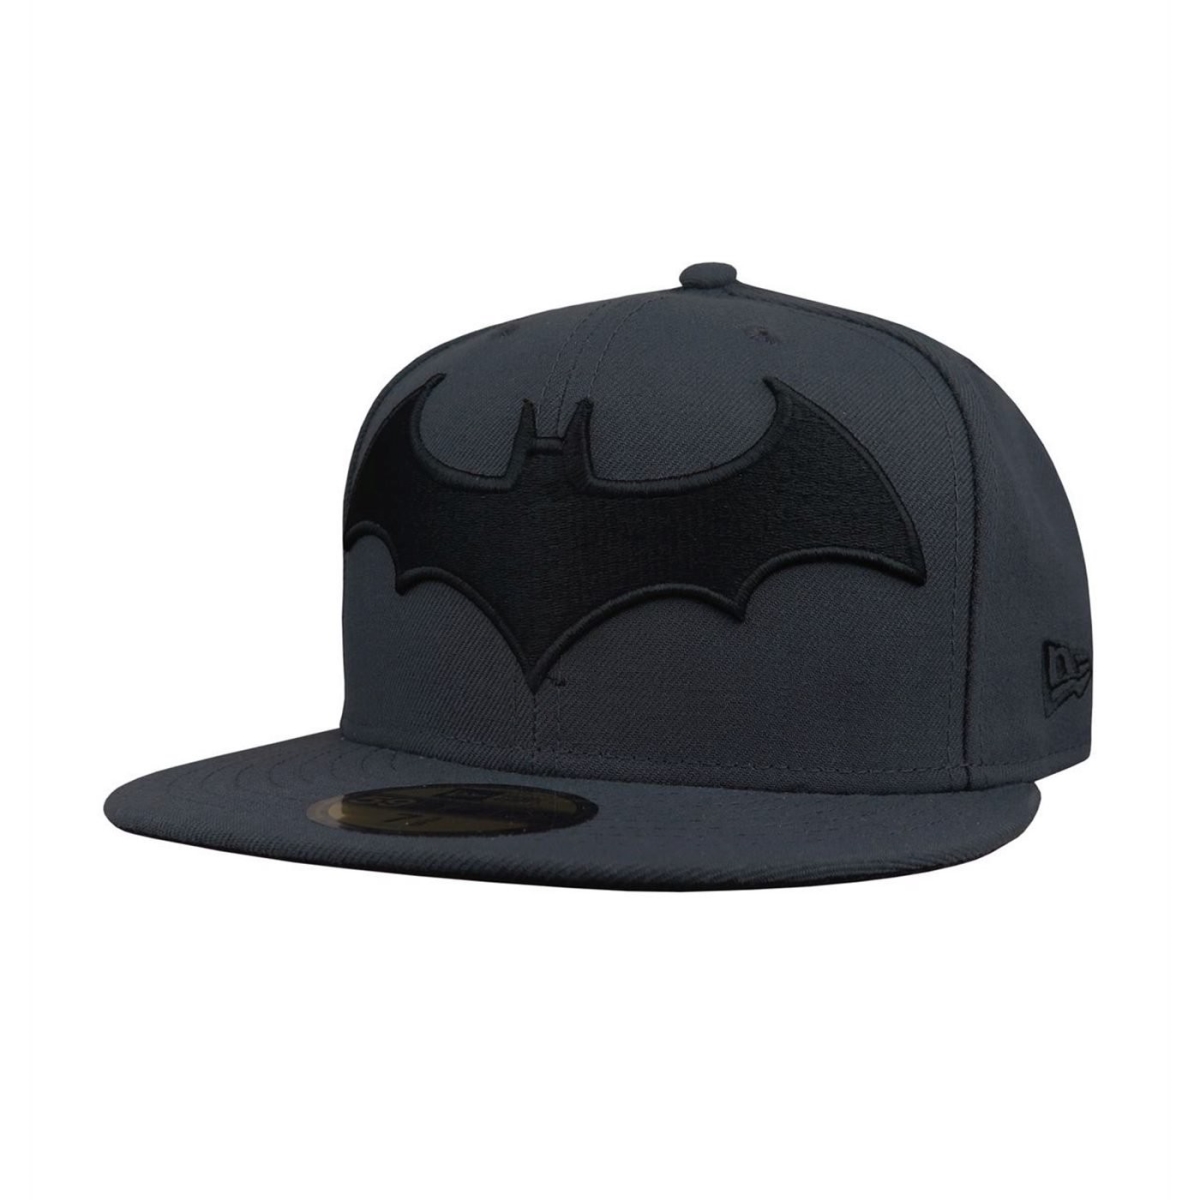 Picture of Batman capbathsh5950-8-8 Fitted Batman Hush Symbol 59Fifty Hat - Size 8